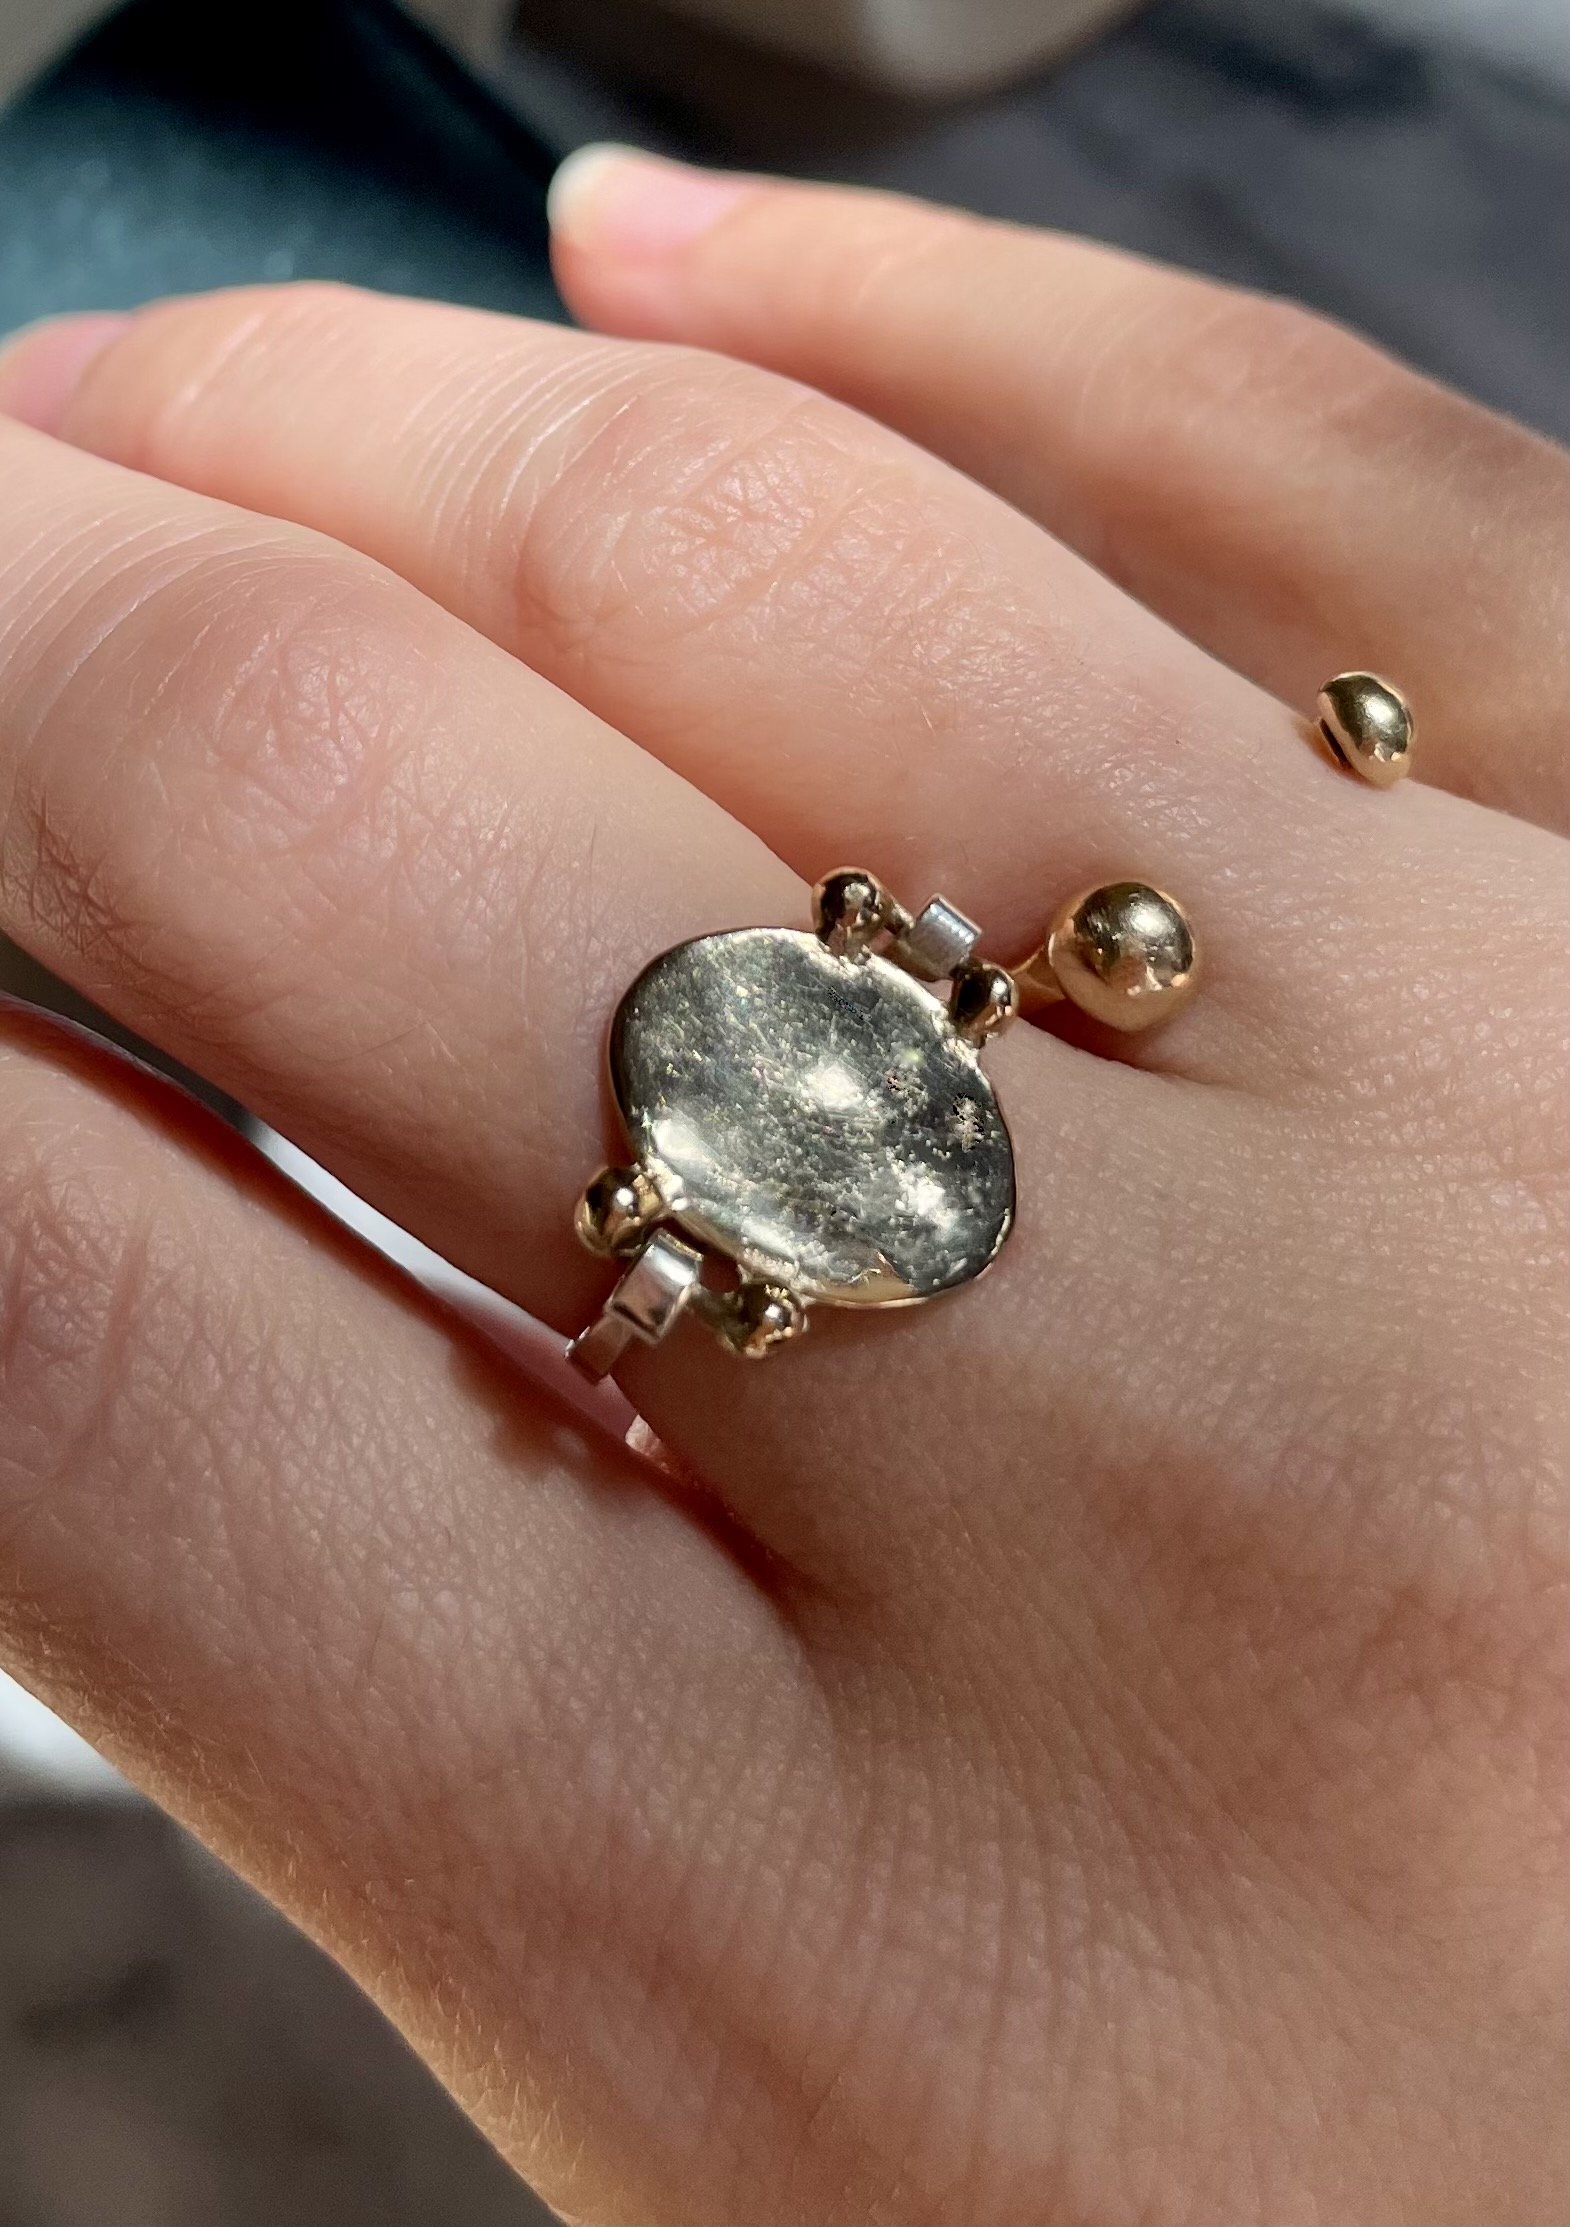 Kennedy 1964 Silver Half Dollar Coin Ring | Unisex Jewelry